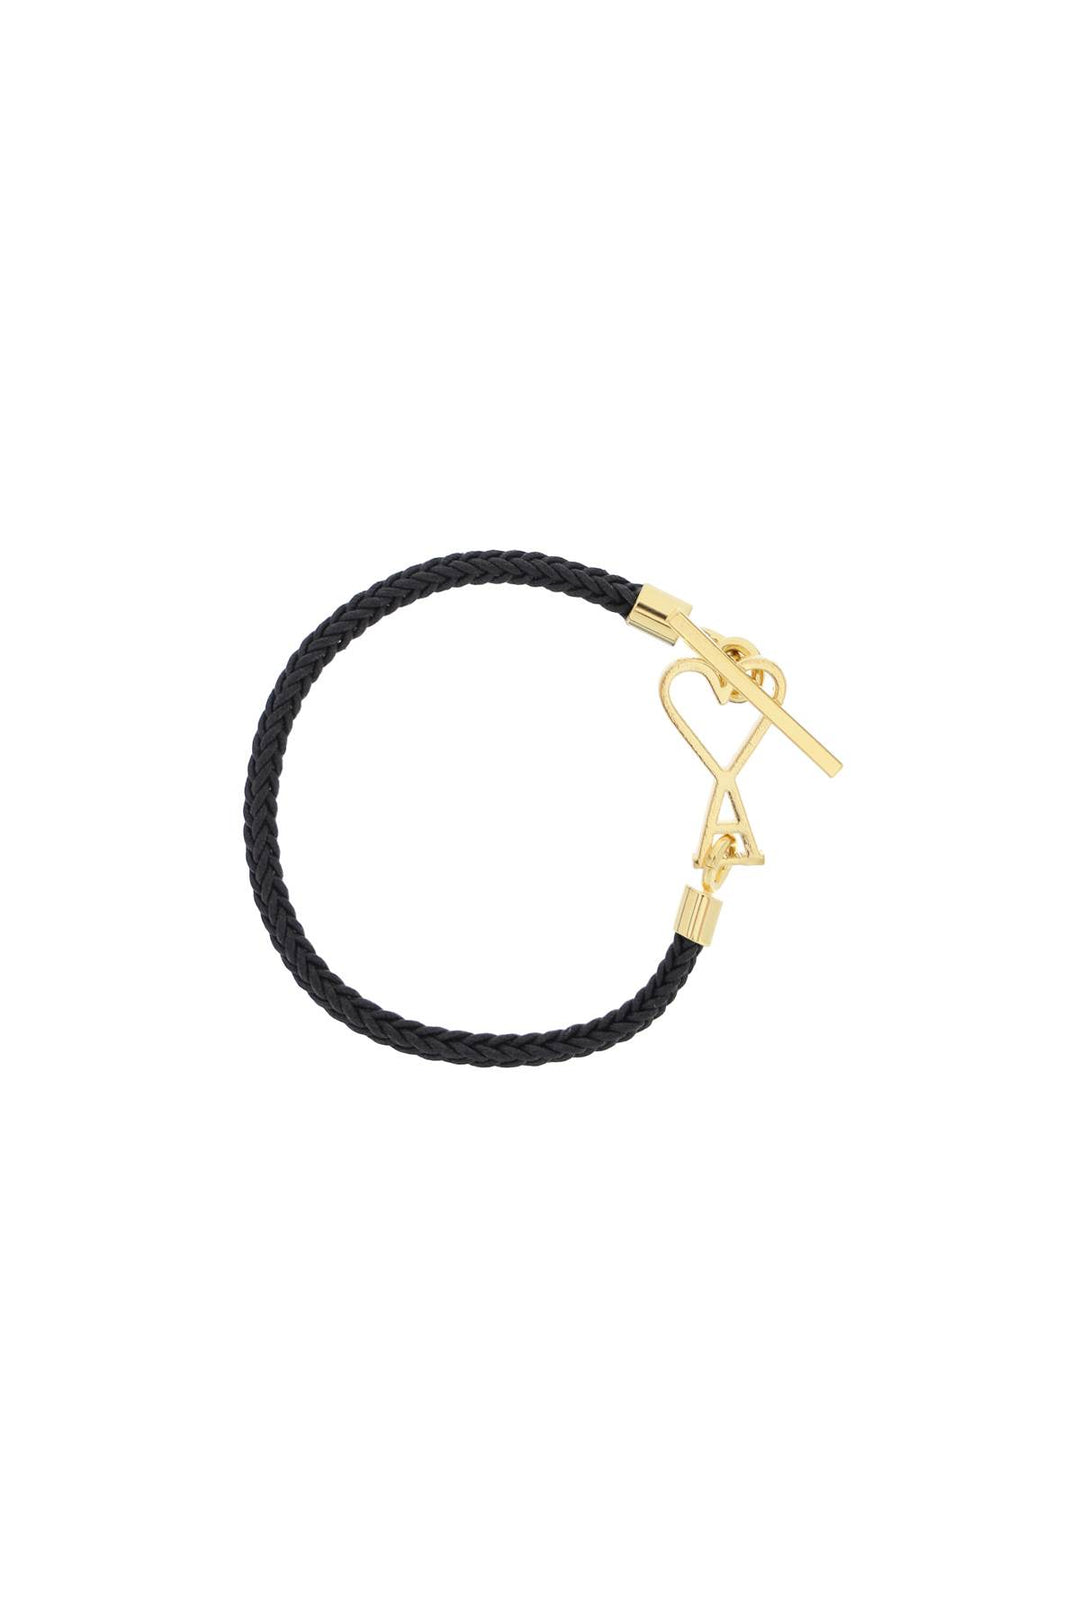 Ami paris rope bracelet with cord-0